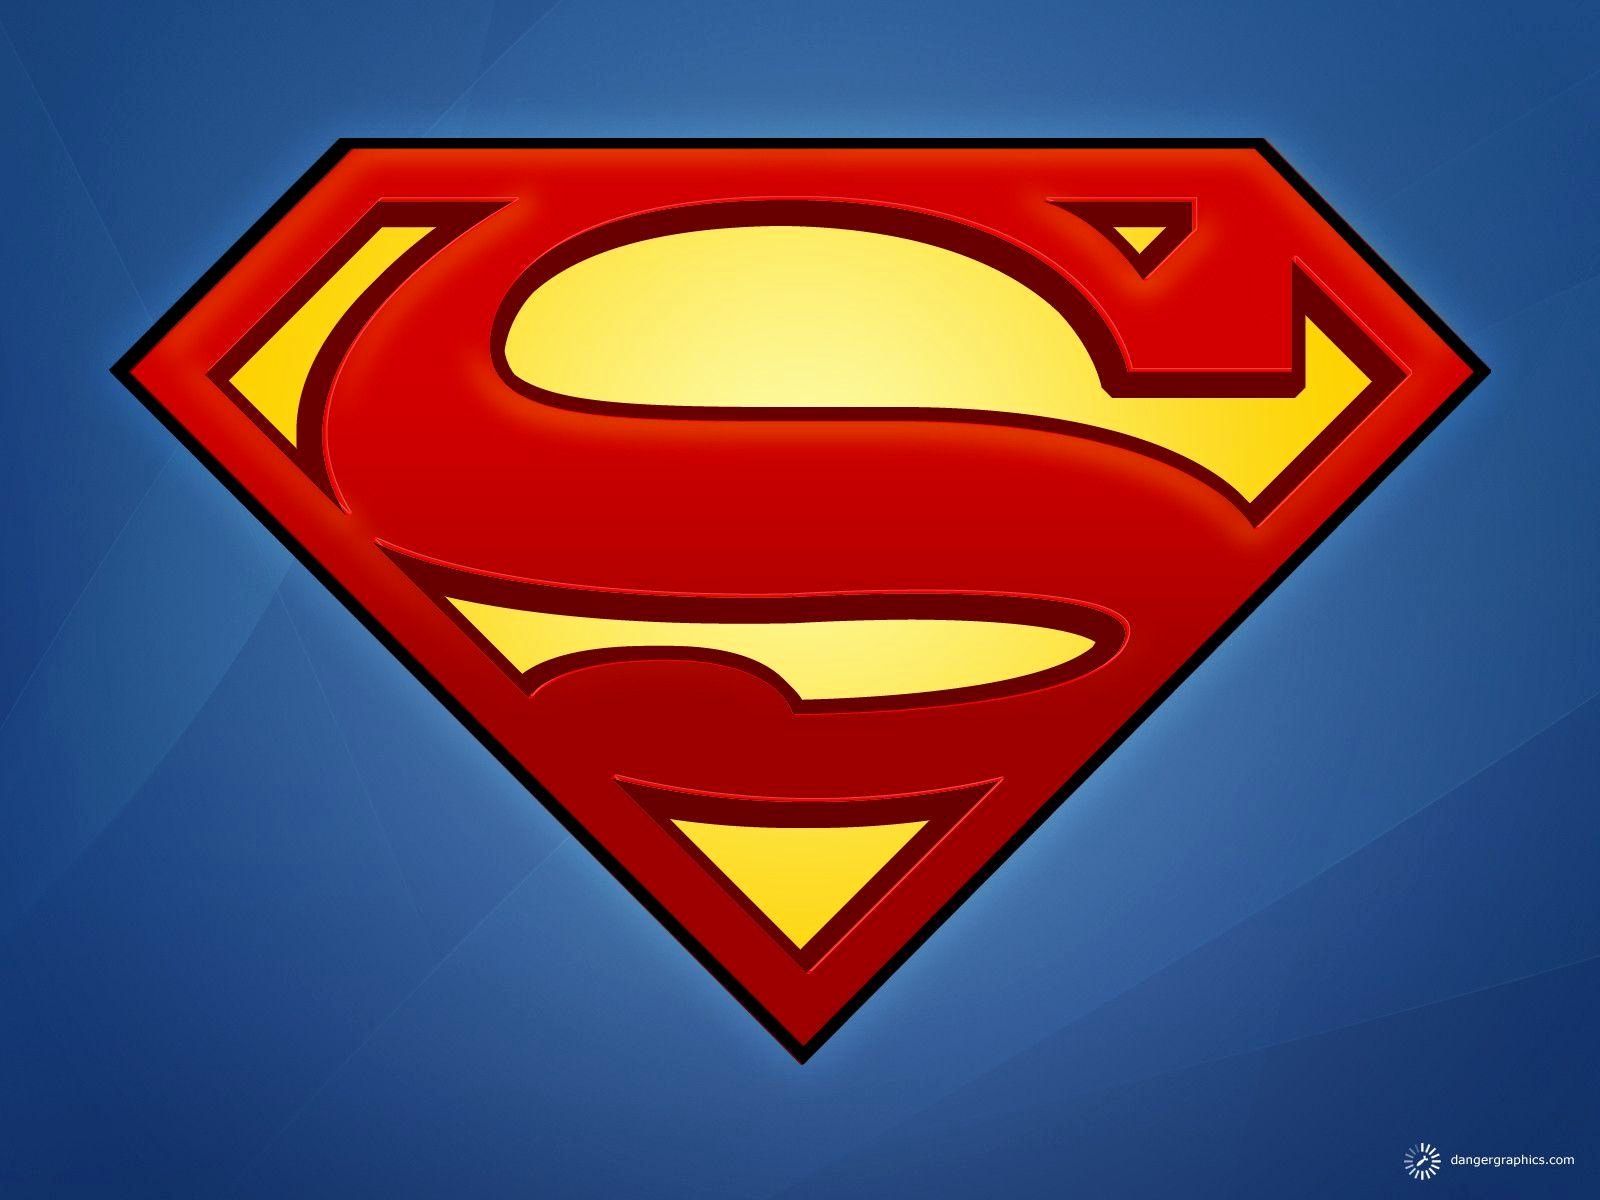 Superman Logo Wallpaper Awesome Superman Logos Wallpaper